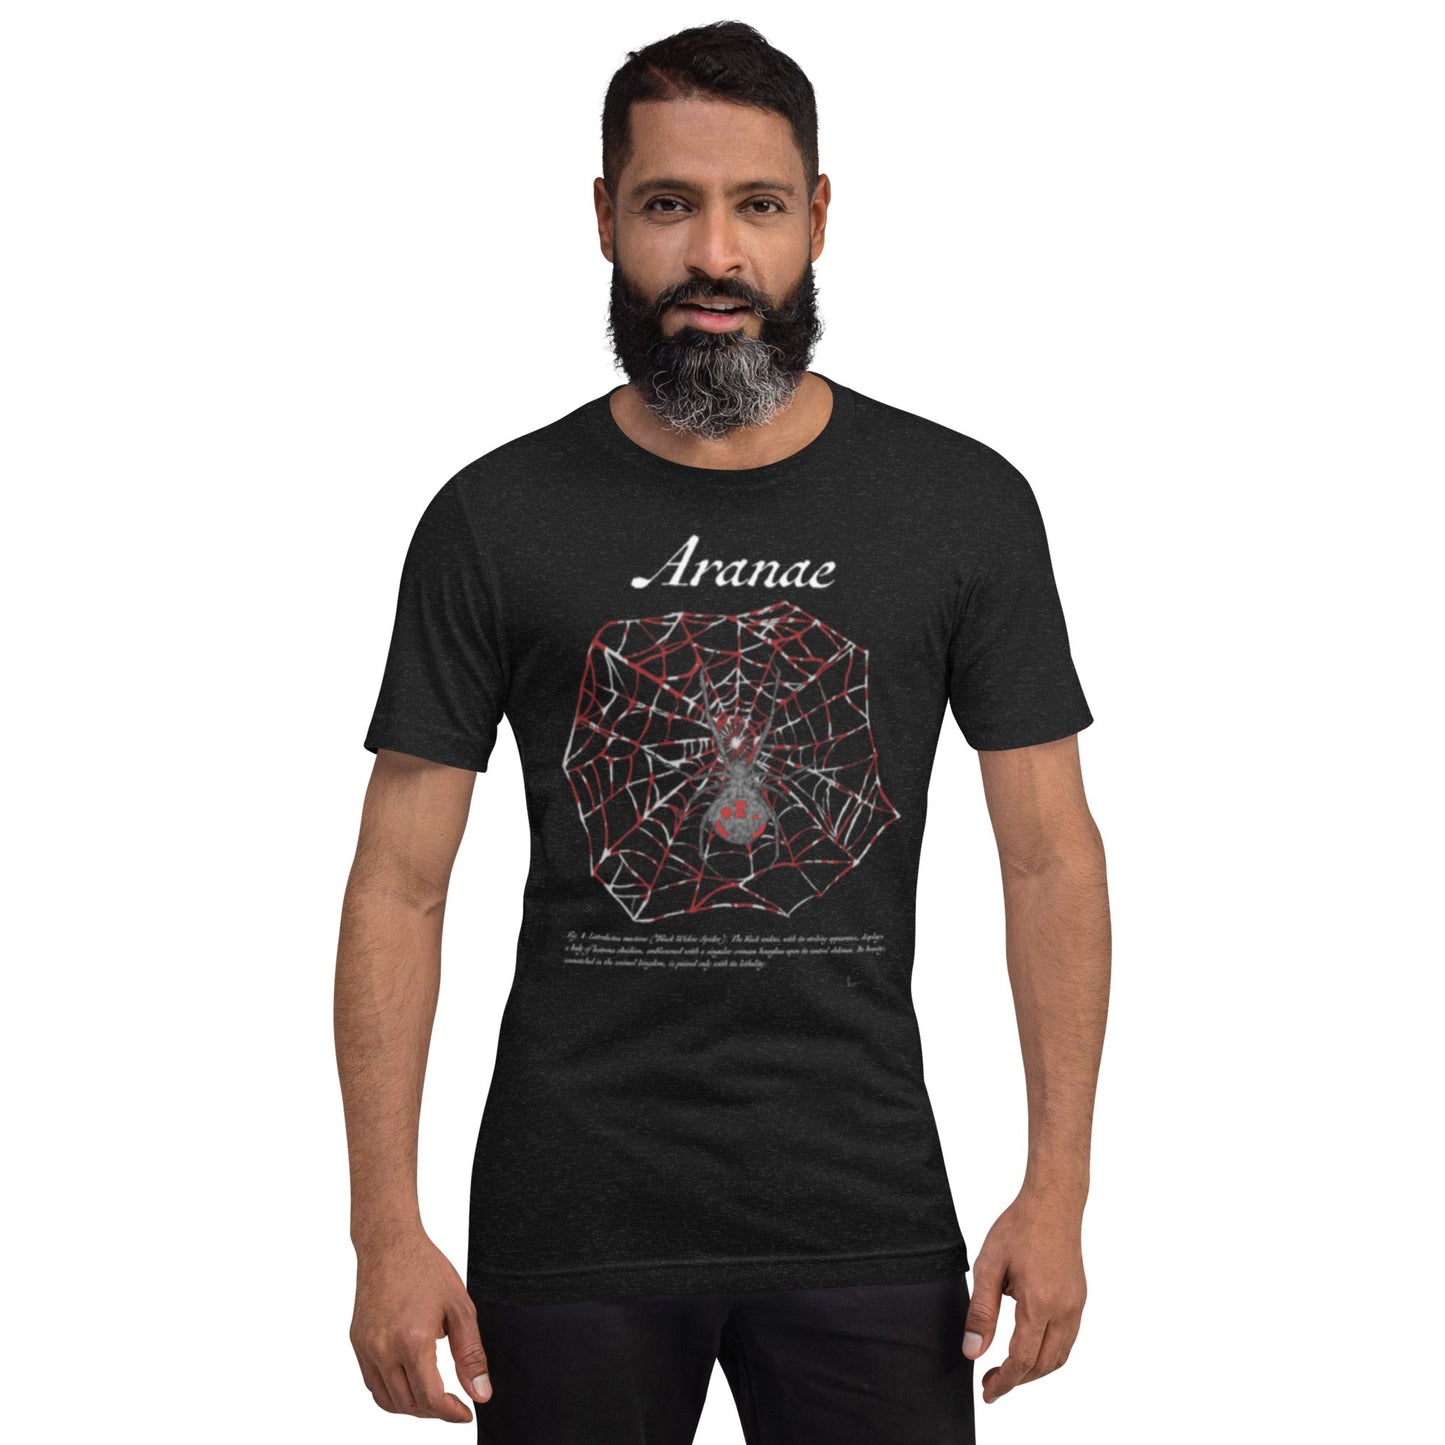 Fig 1. Aranae - Bella Canvas T-Shirt - Science Label